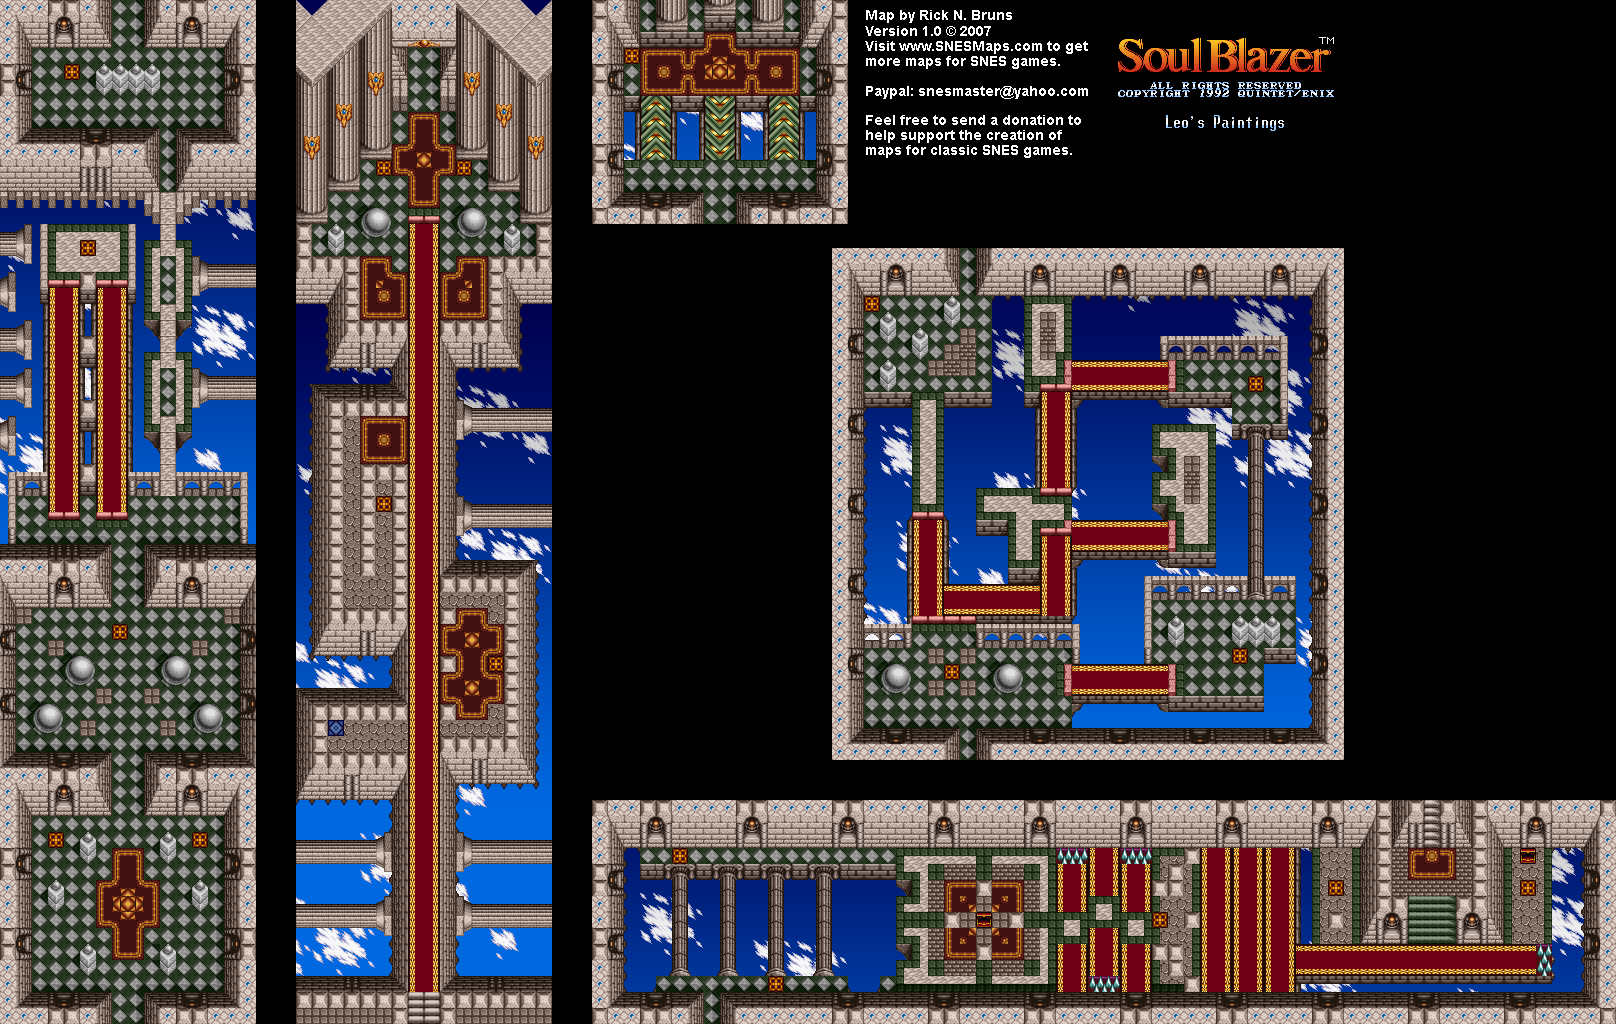 Soul Blazer - Leo's Paintings (After) Map - SNES Super Nintendo